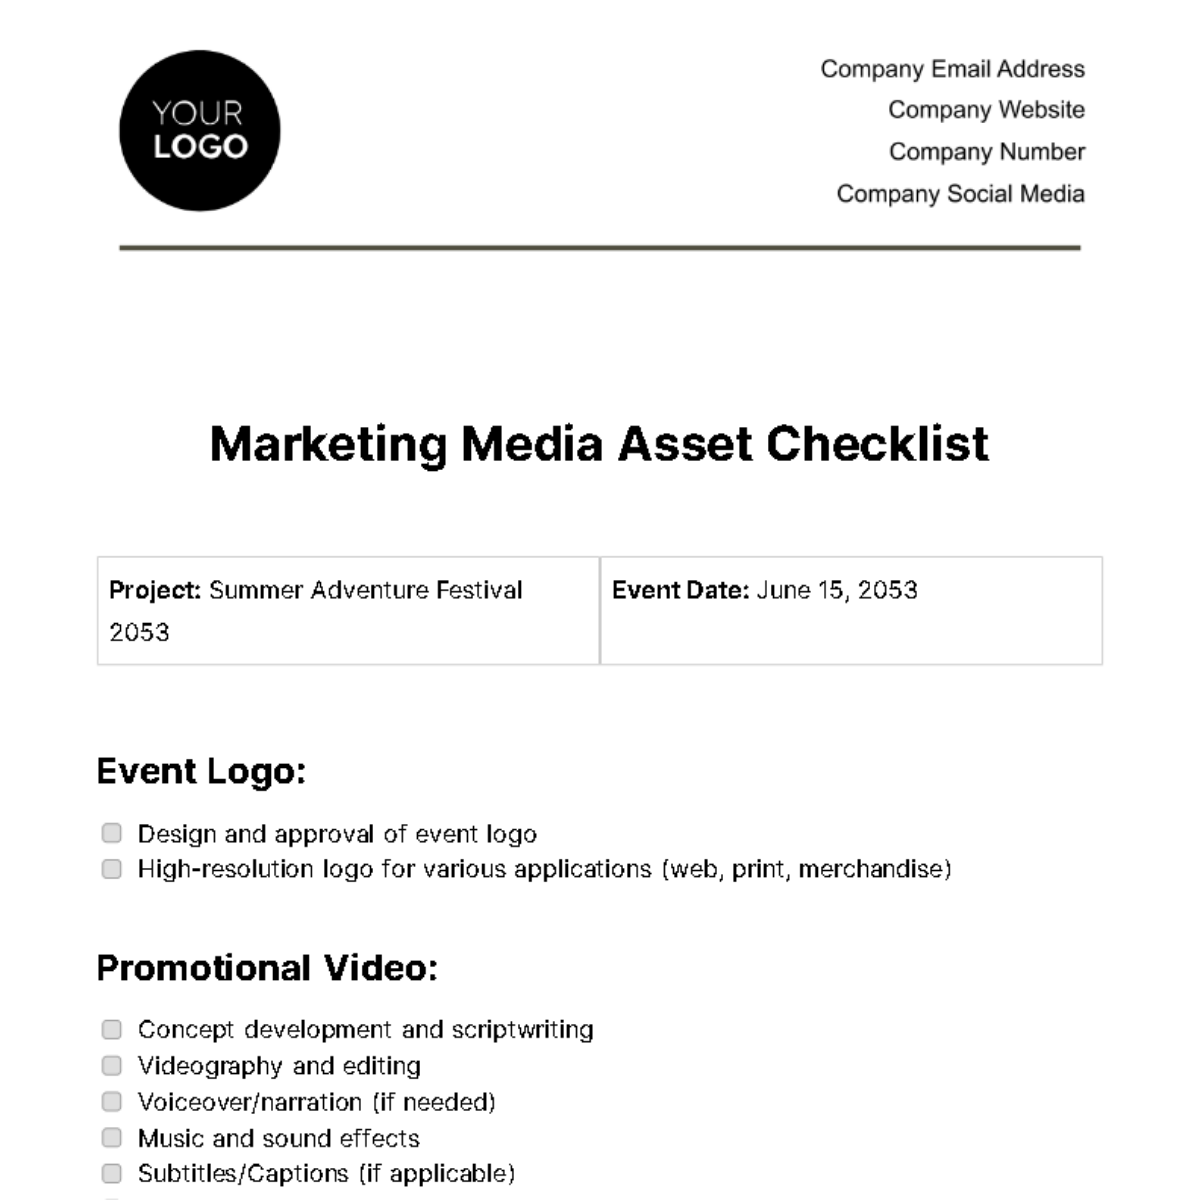 Marketing Media Asset Checklist Template